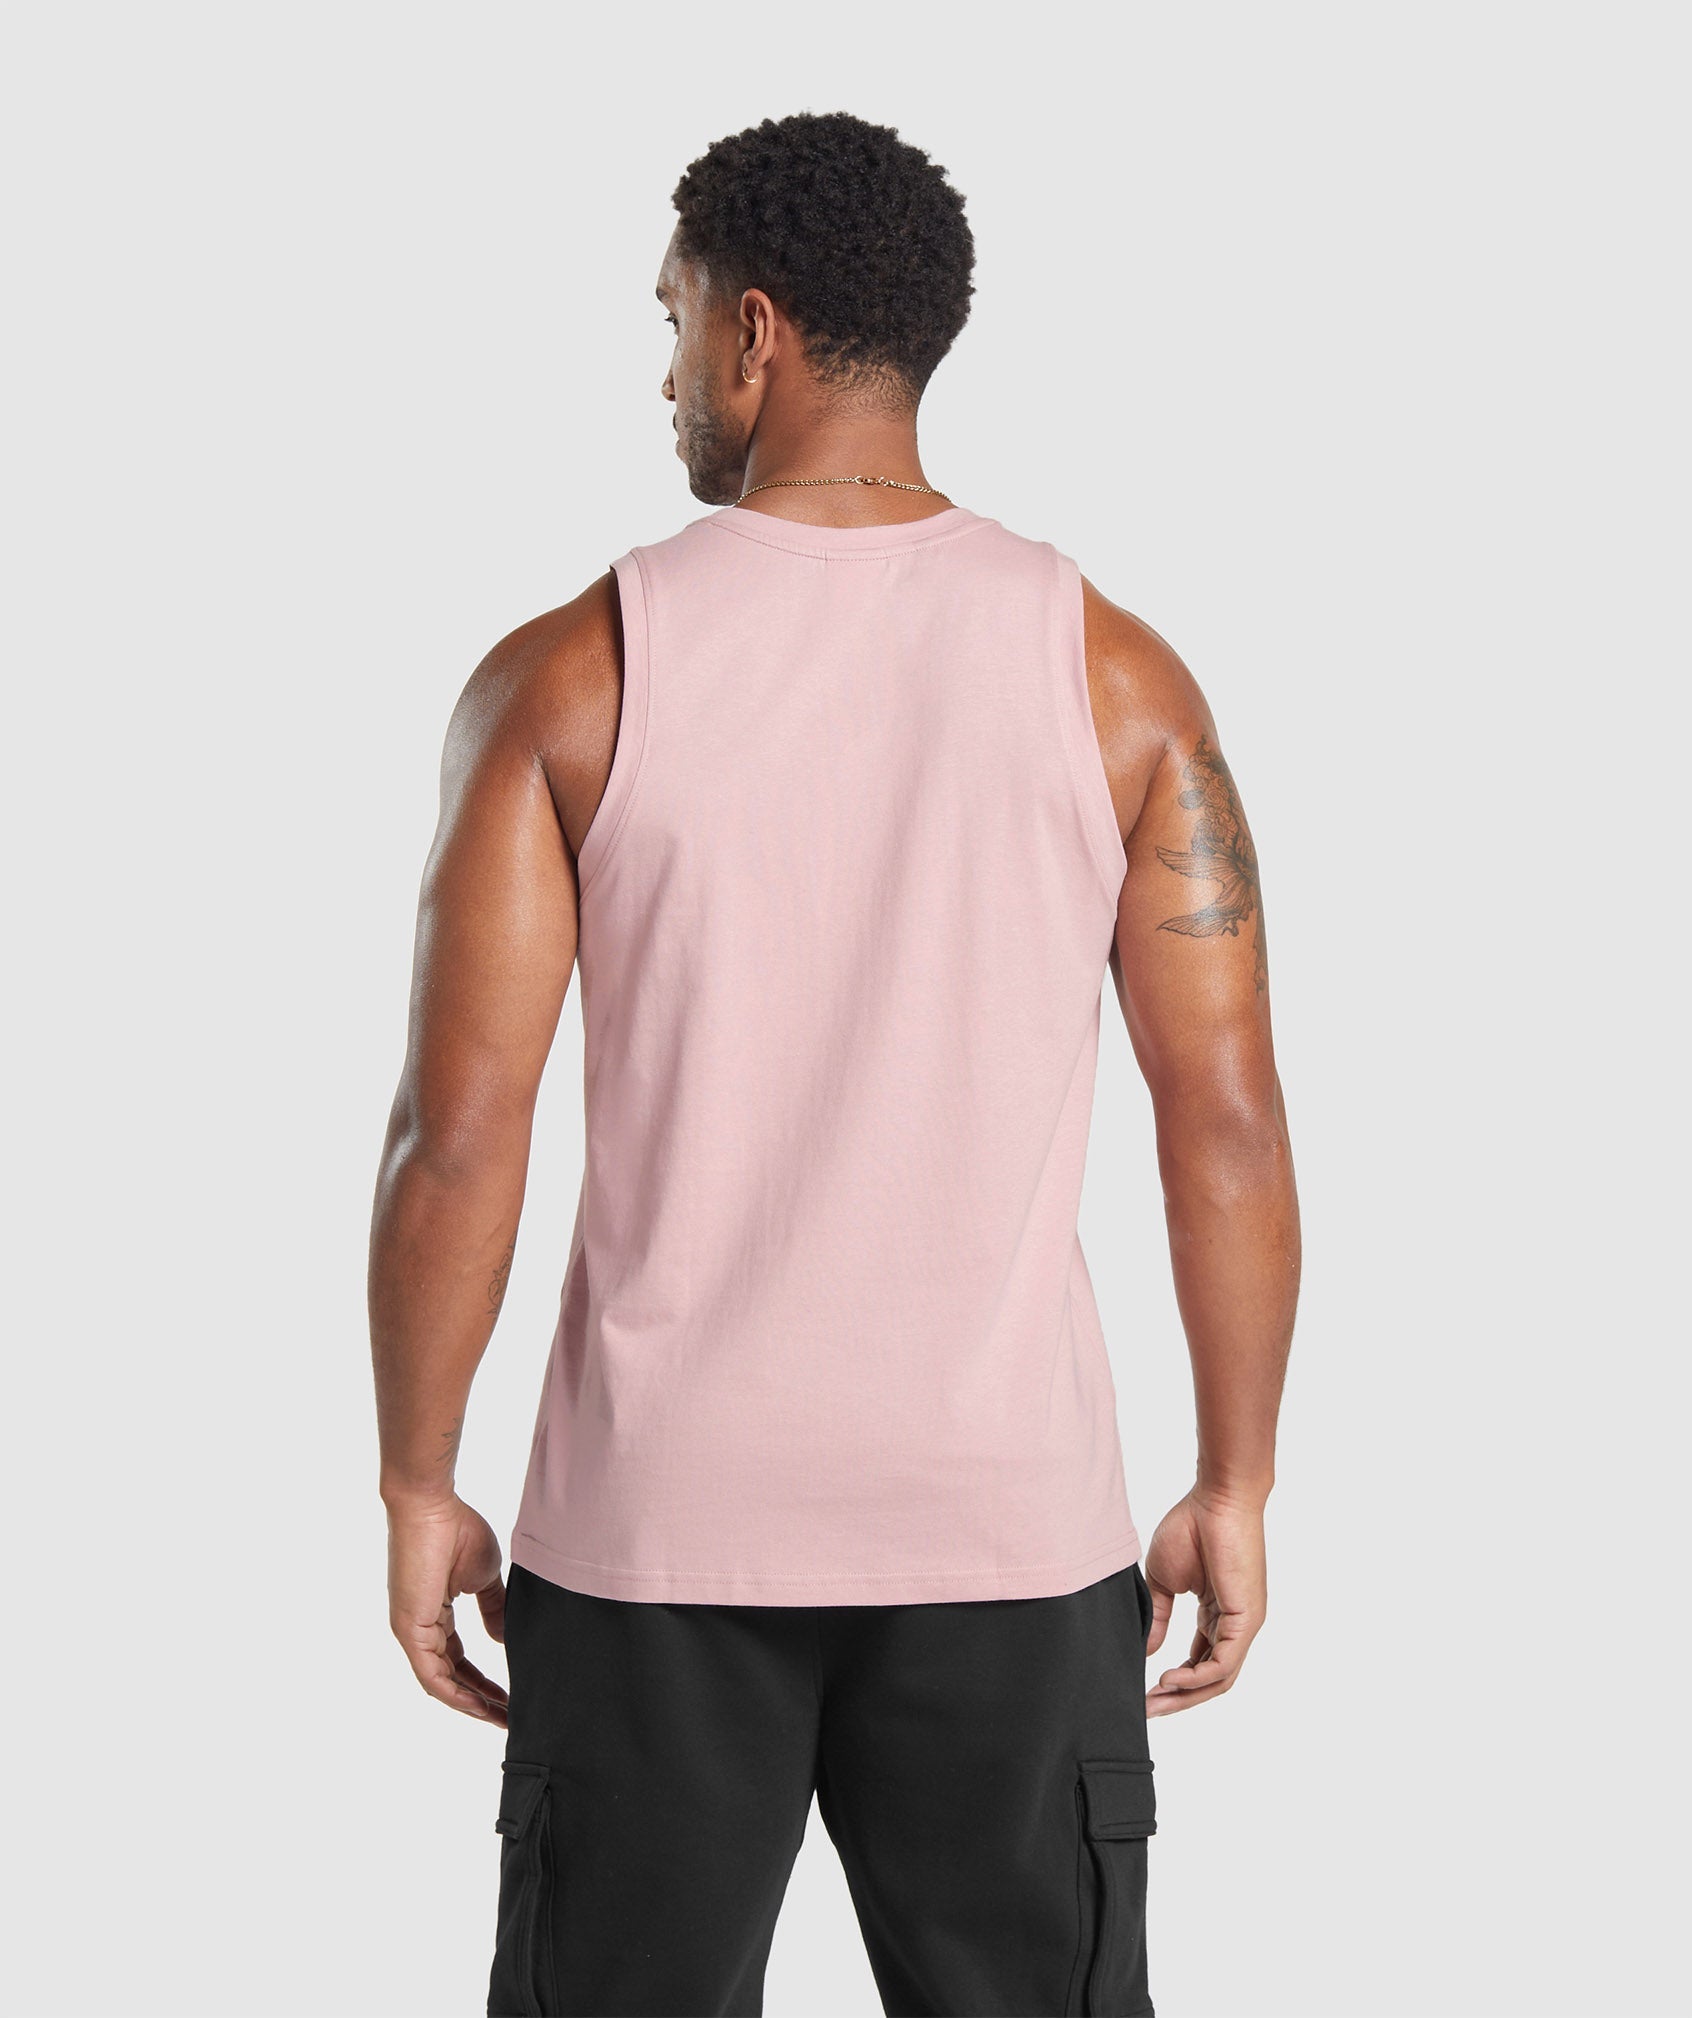 Gymshark Men's Singlet Fitness Shirts Summer Casual Vest Cotton